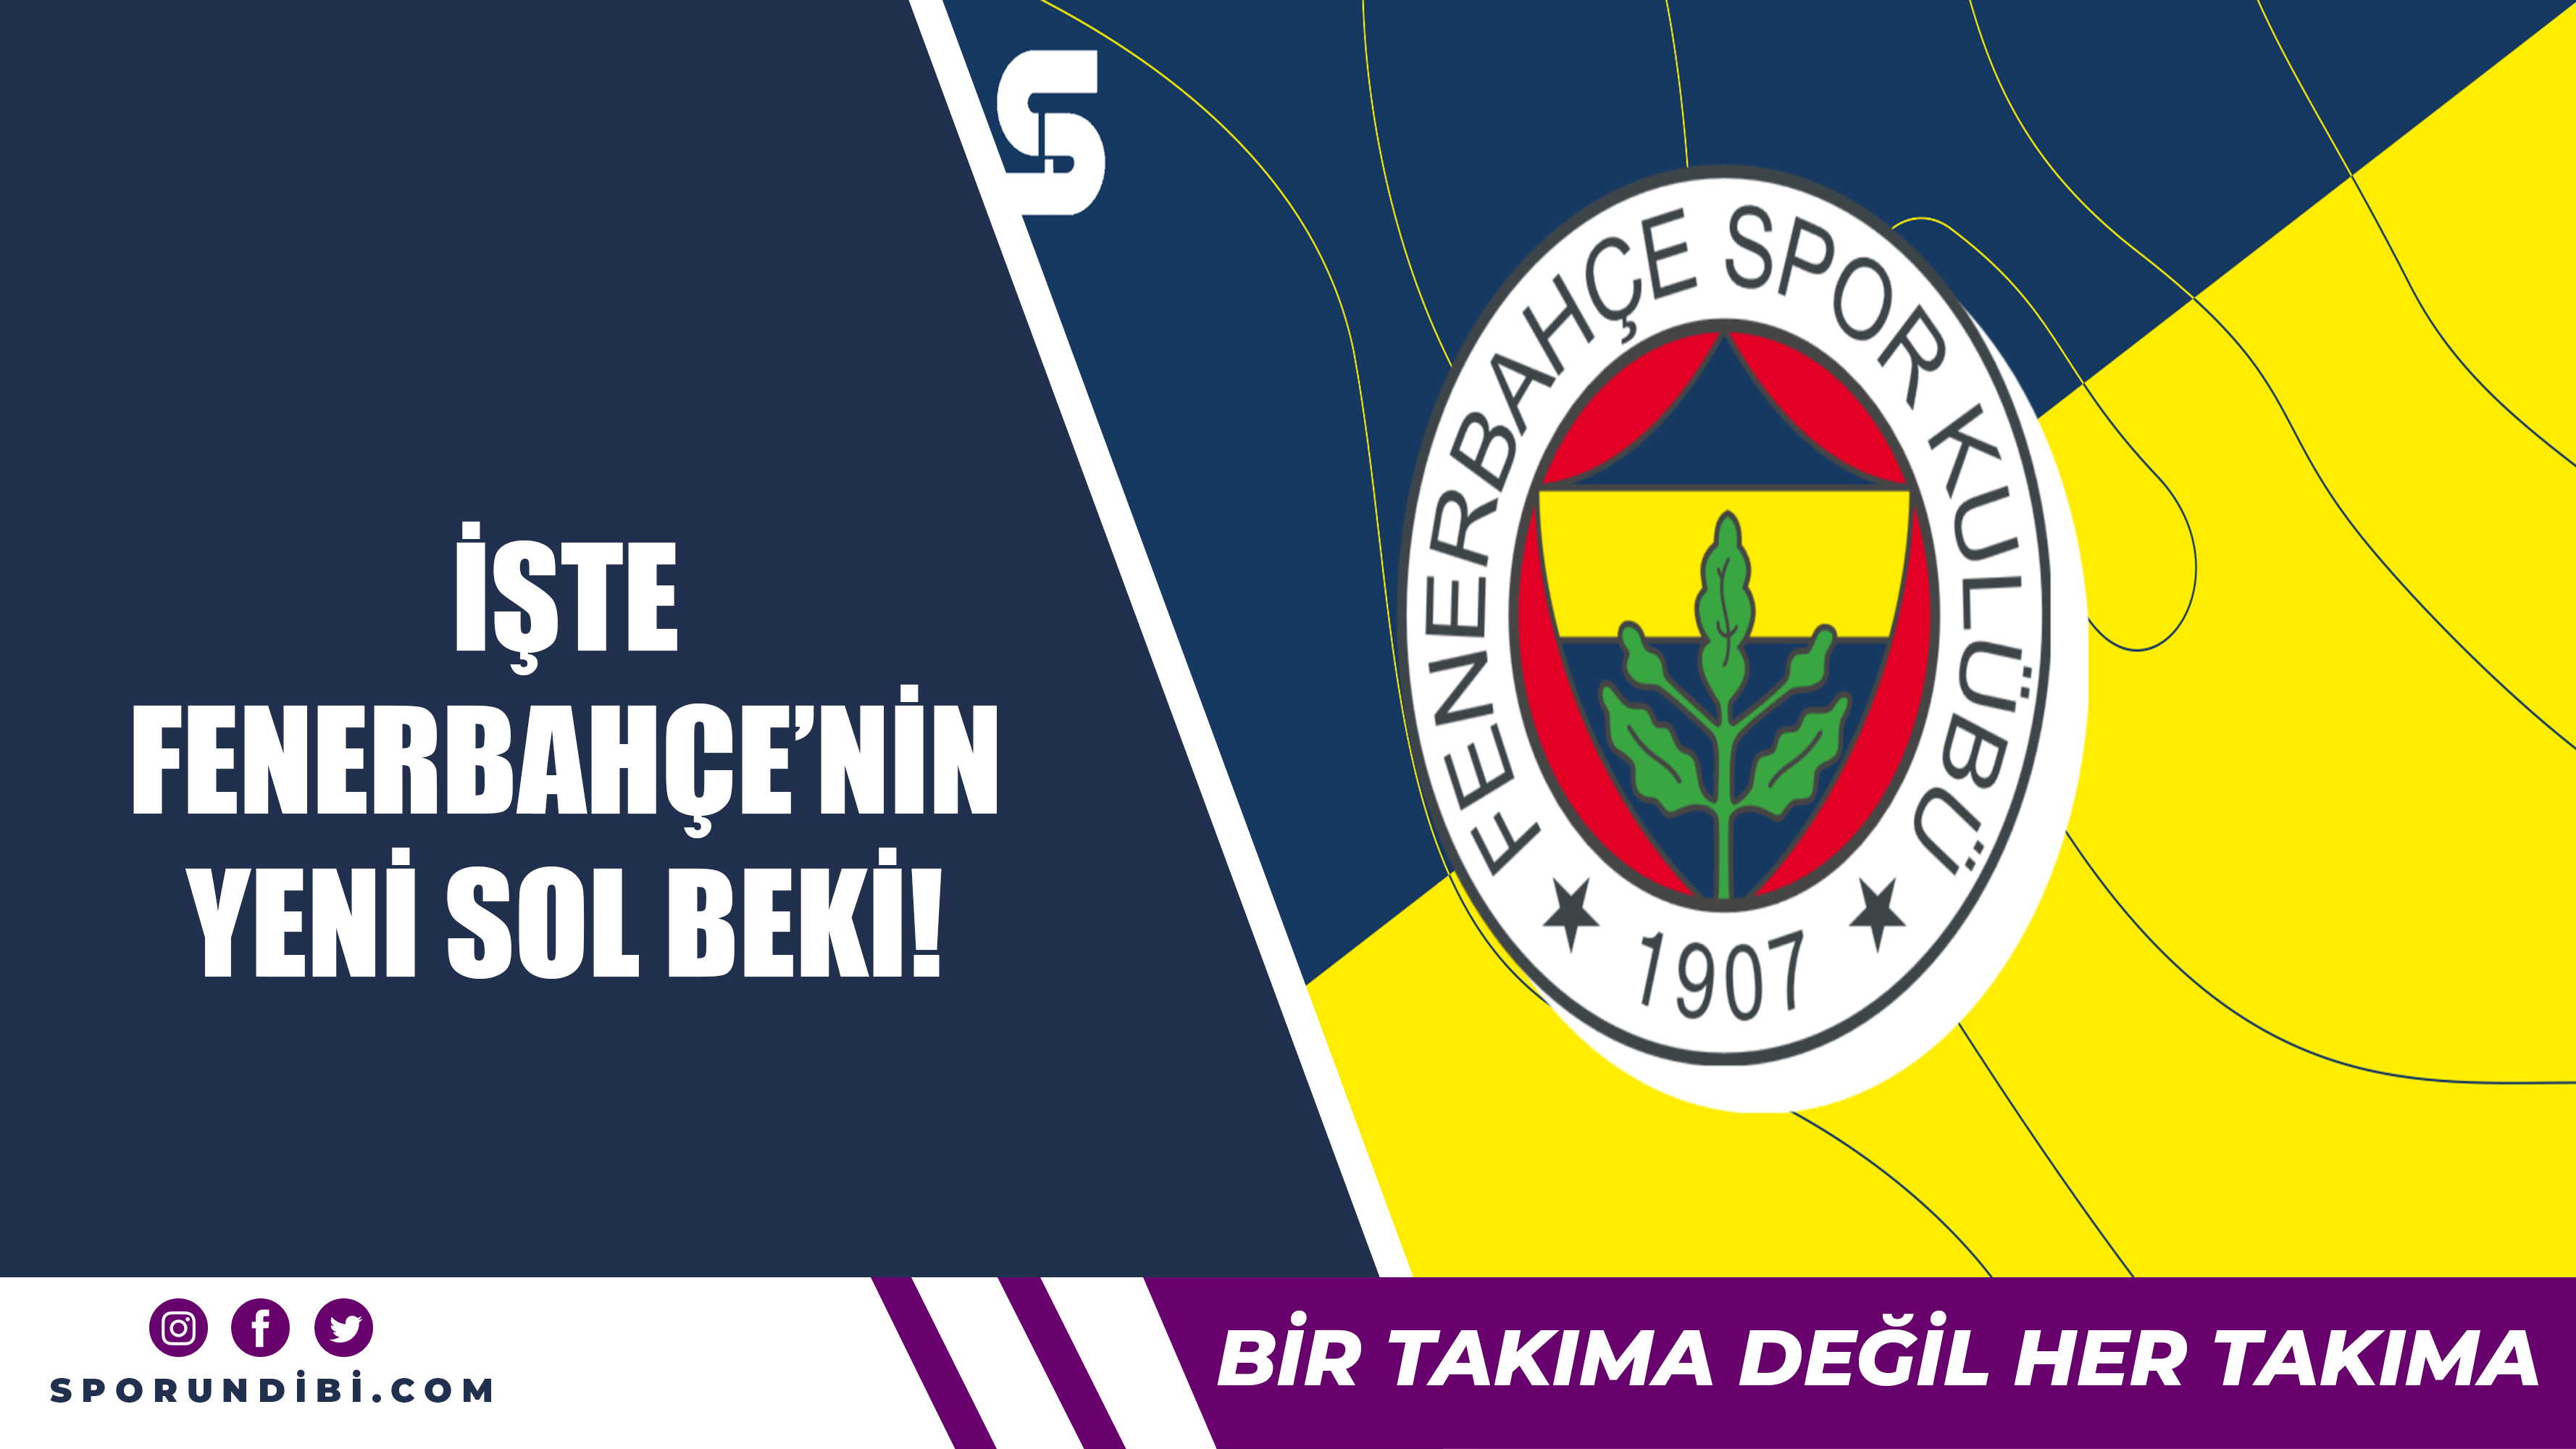 İşte Fenerbahçe'nin yeni sol beki!